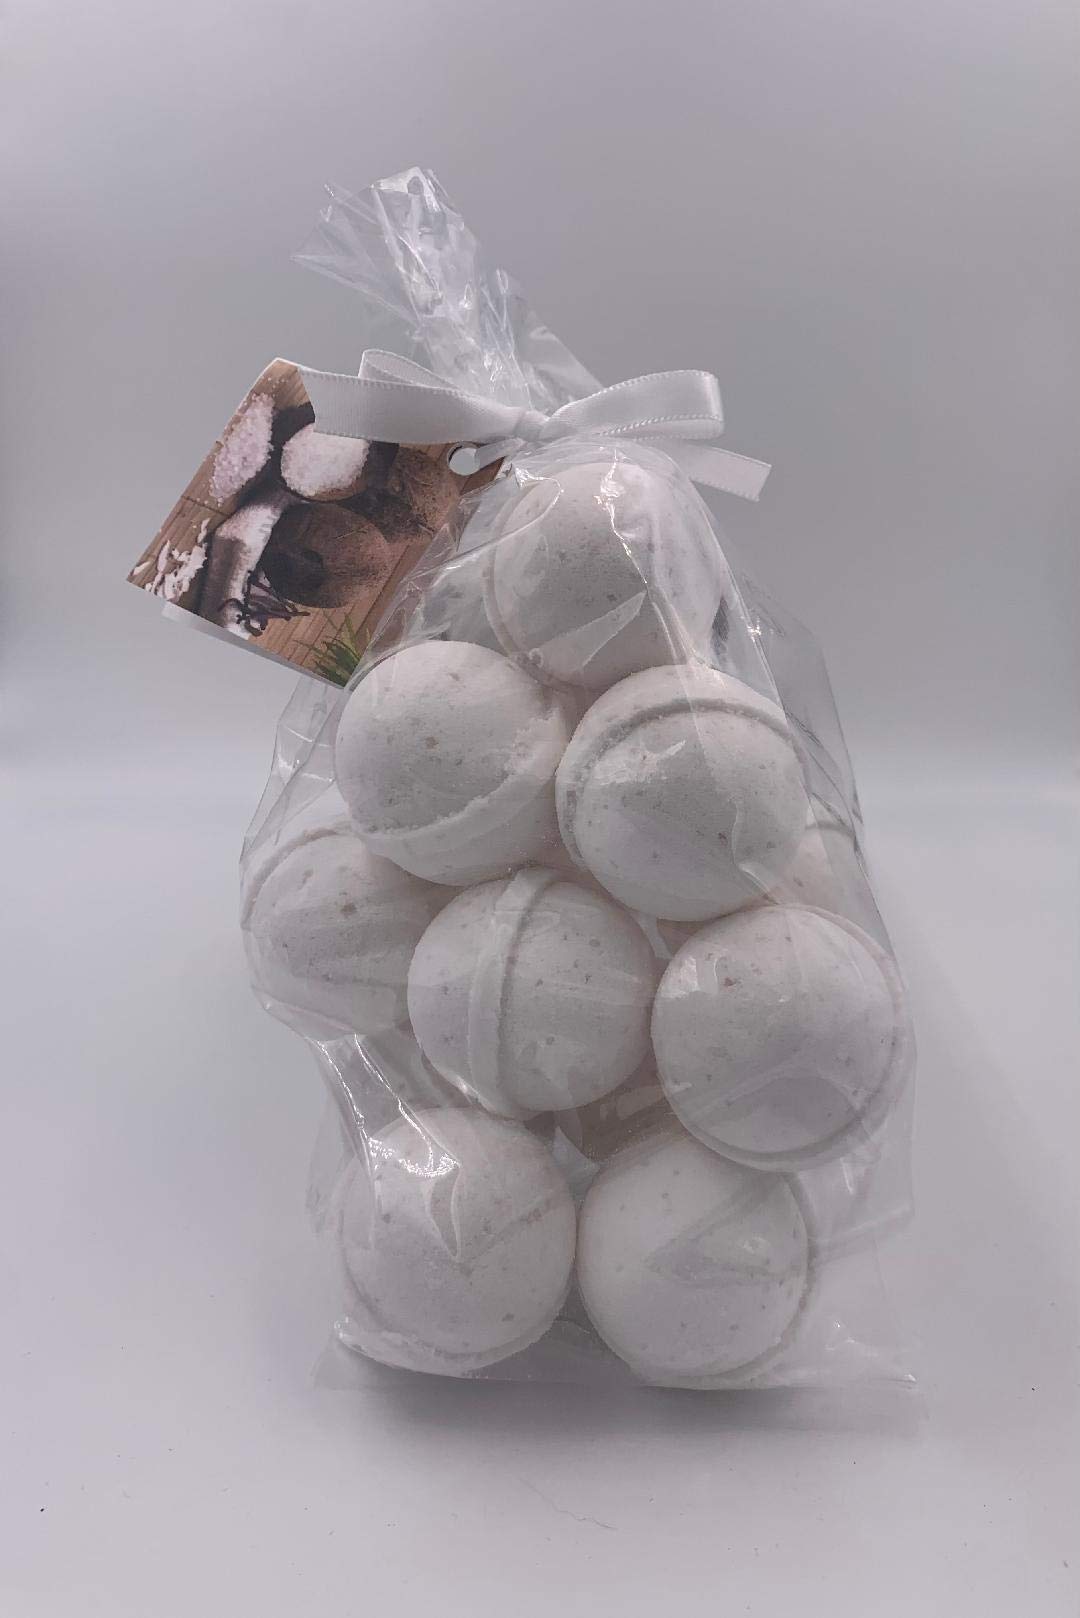 Spa Pure Coconut Vanilla Bath Bombs: 14 Coconut Vanilla Bath Bomb Fizzies with Shea Butter (Ultra Moisturizing) 1 Oz Each Great for Dry Skin (Coconut Vanilla)